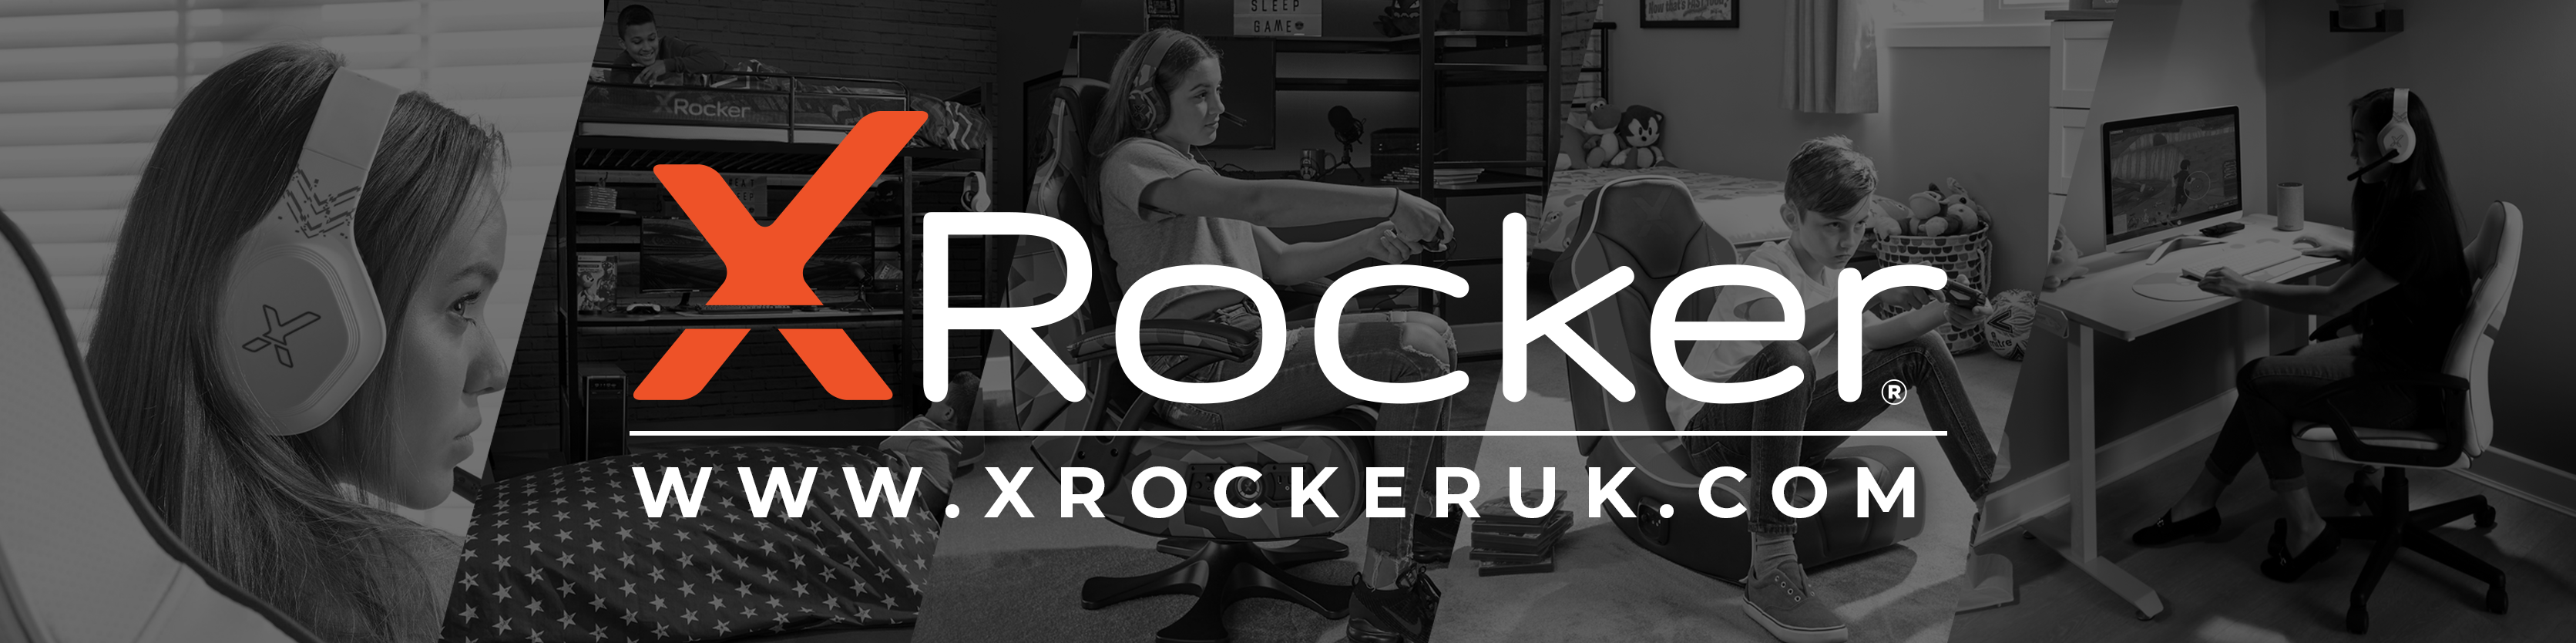 X Rocker Brand Banner